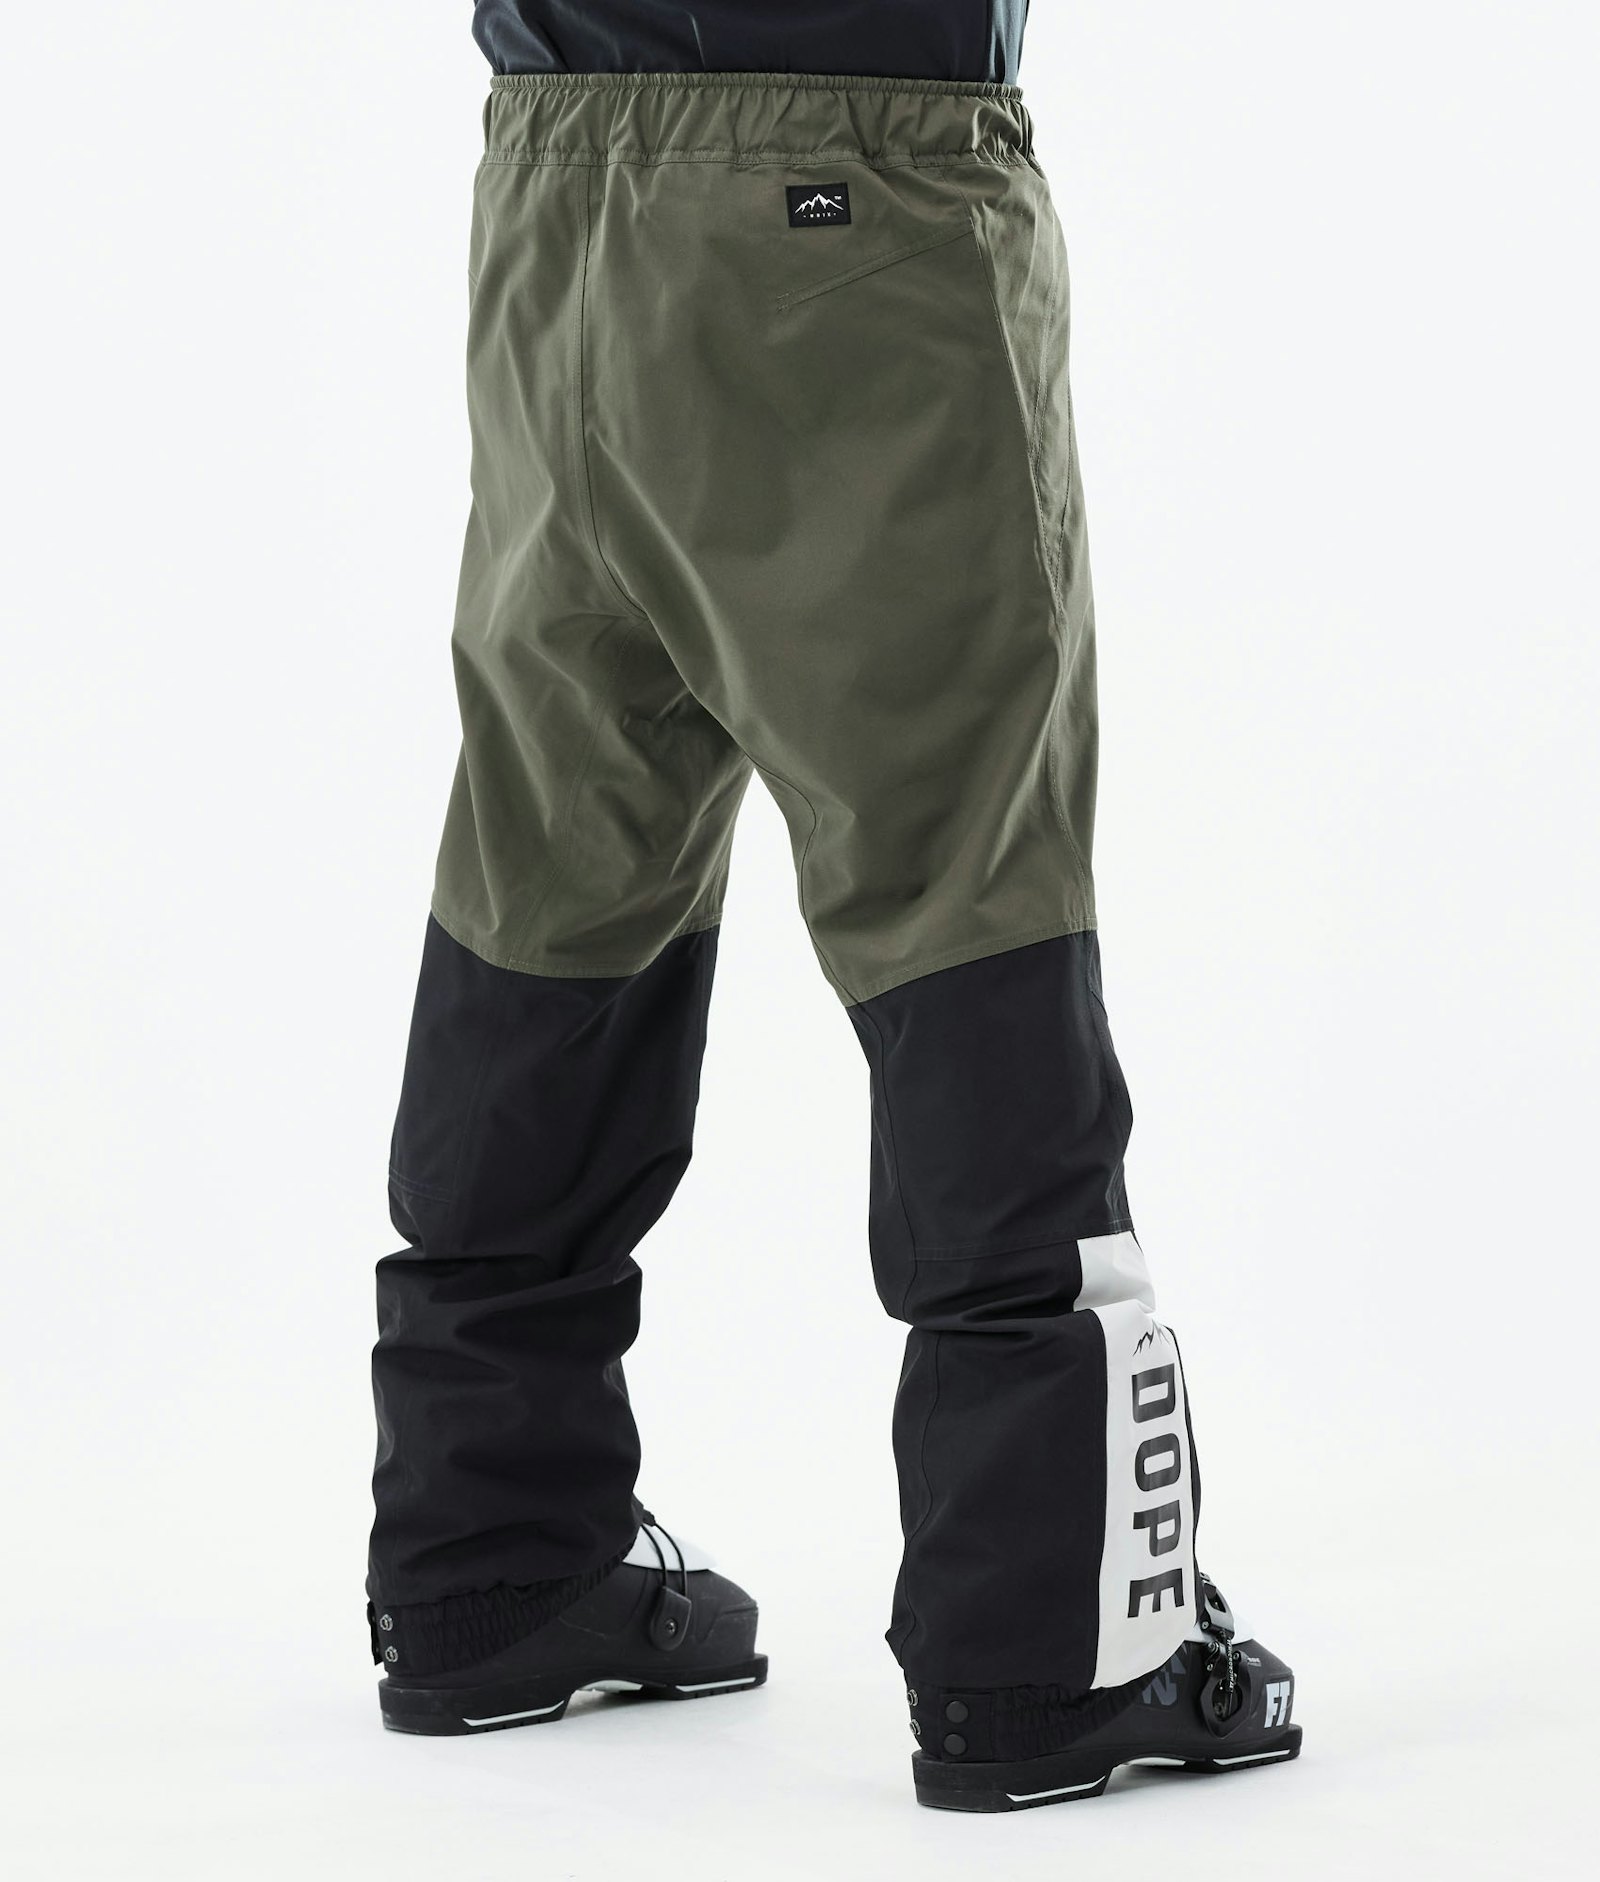 Blizzard LE Pantalon de Ski Homme Limited Edition Multicolor Olive Green